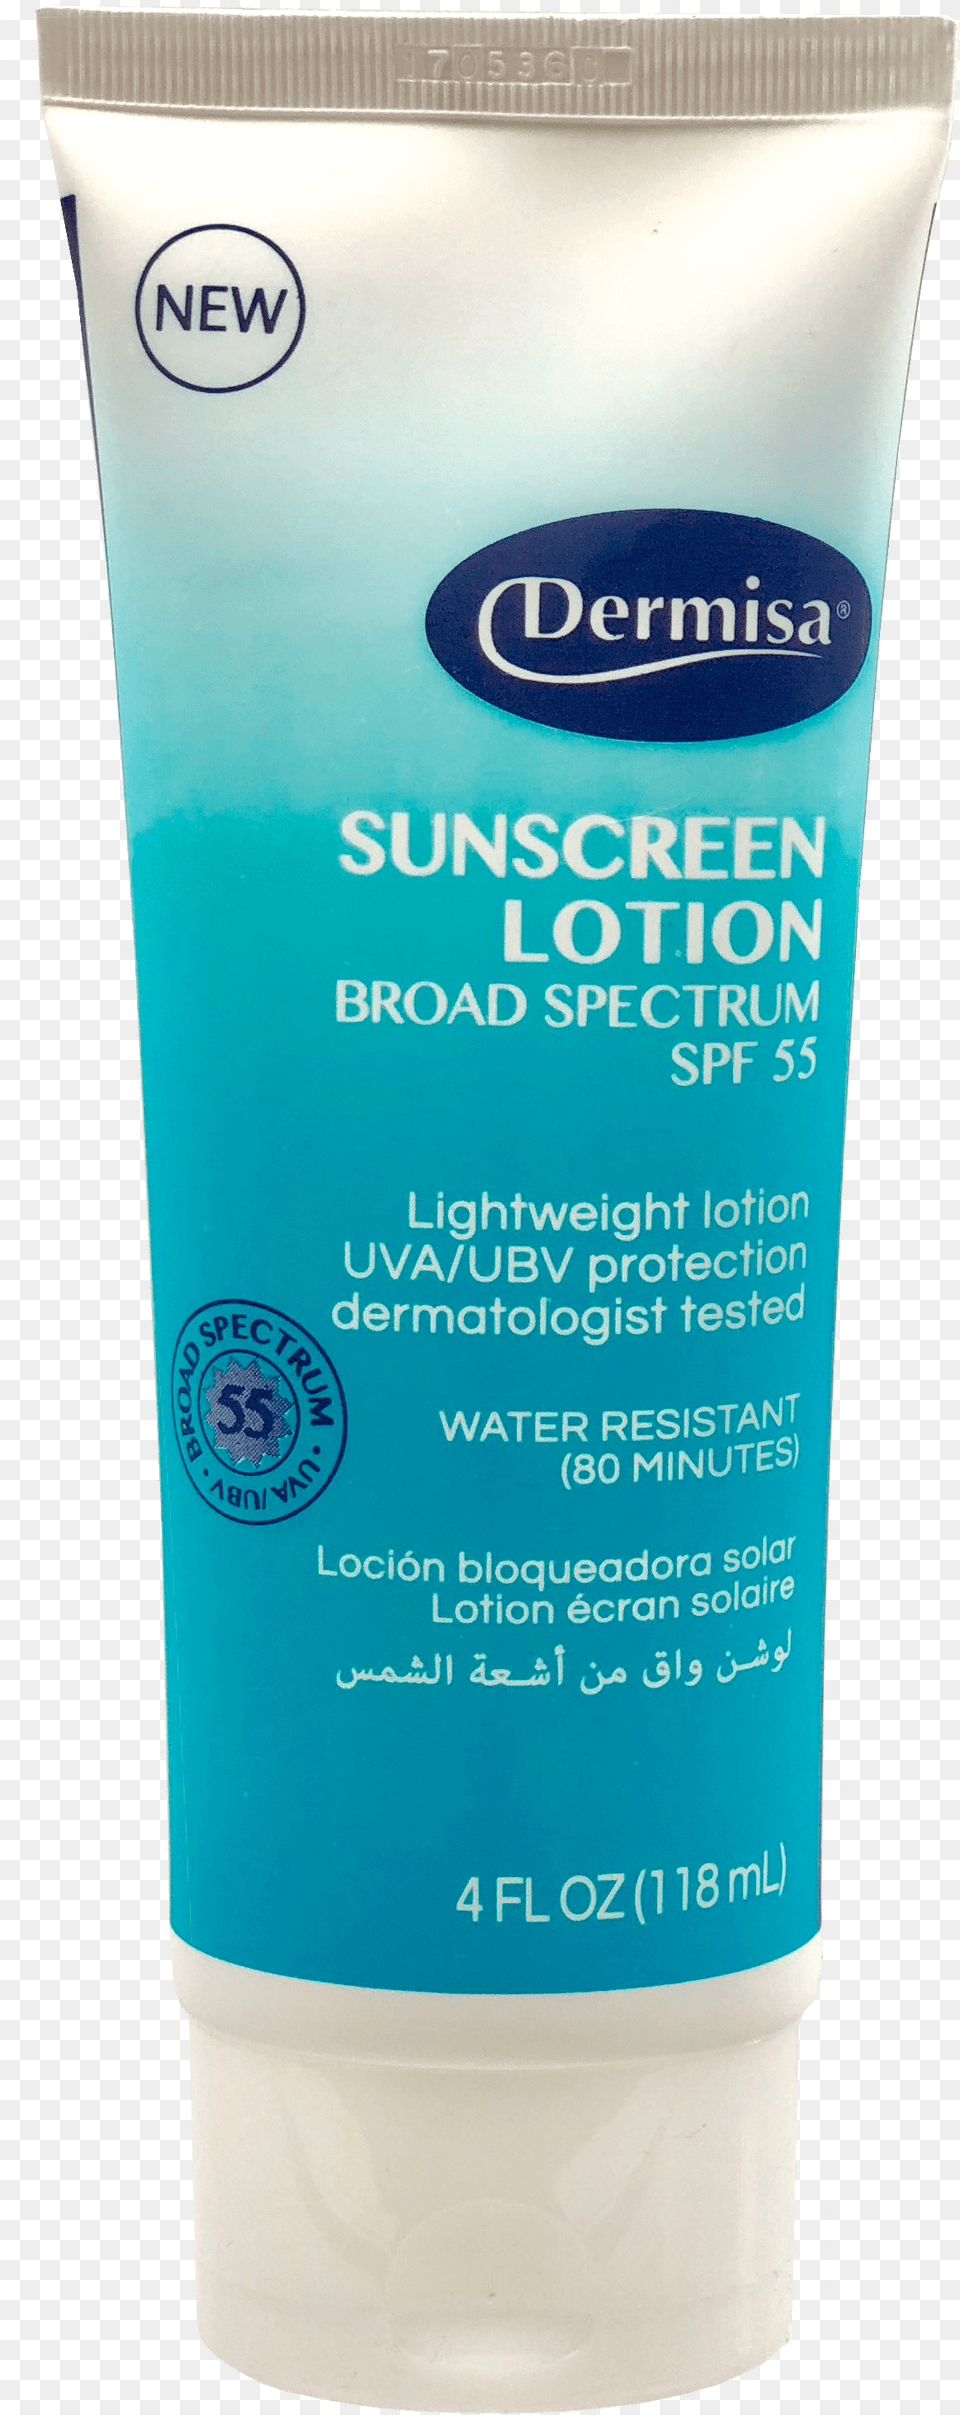 Dermisa Sunscreen Lotion Broad Spectrum Spf 55 4 Oz, Bottle, Cosmetics, Can, Tin Png